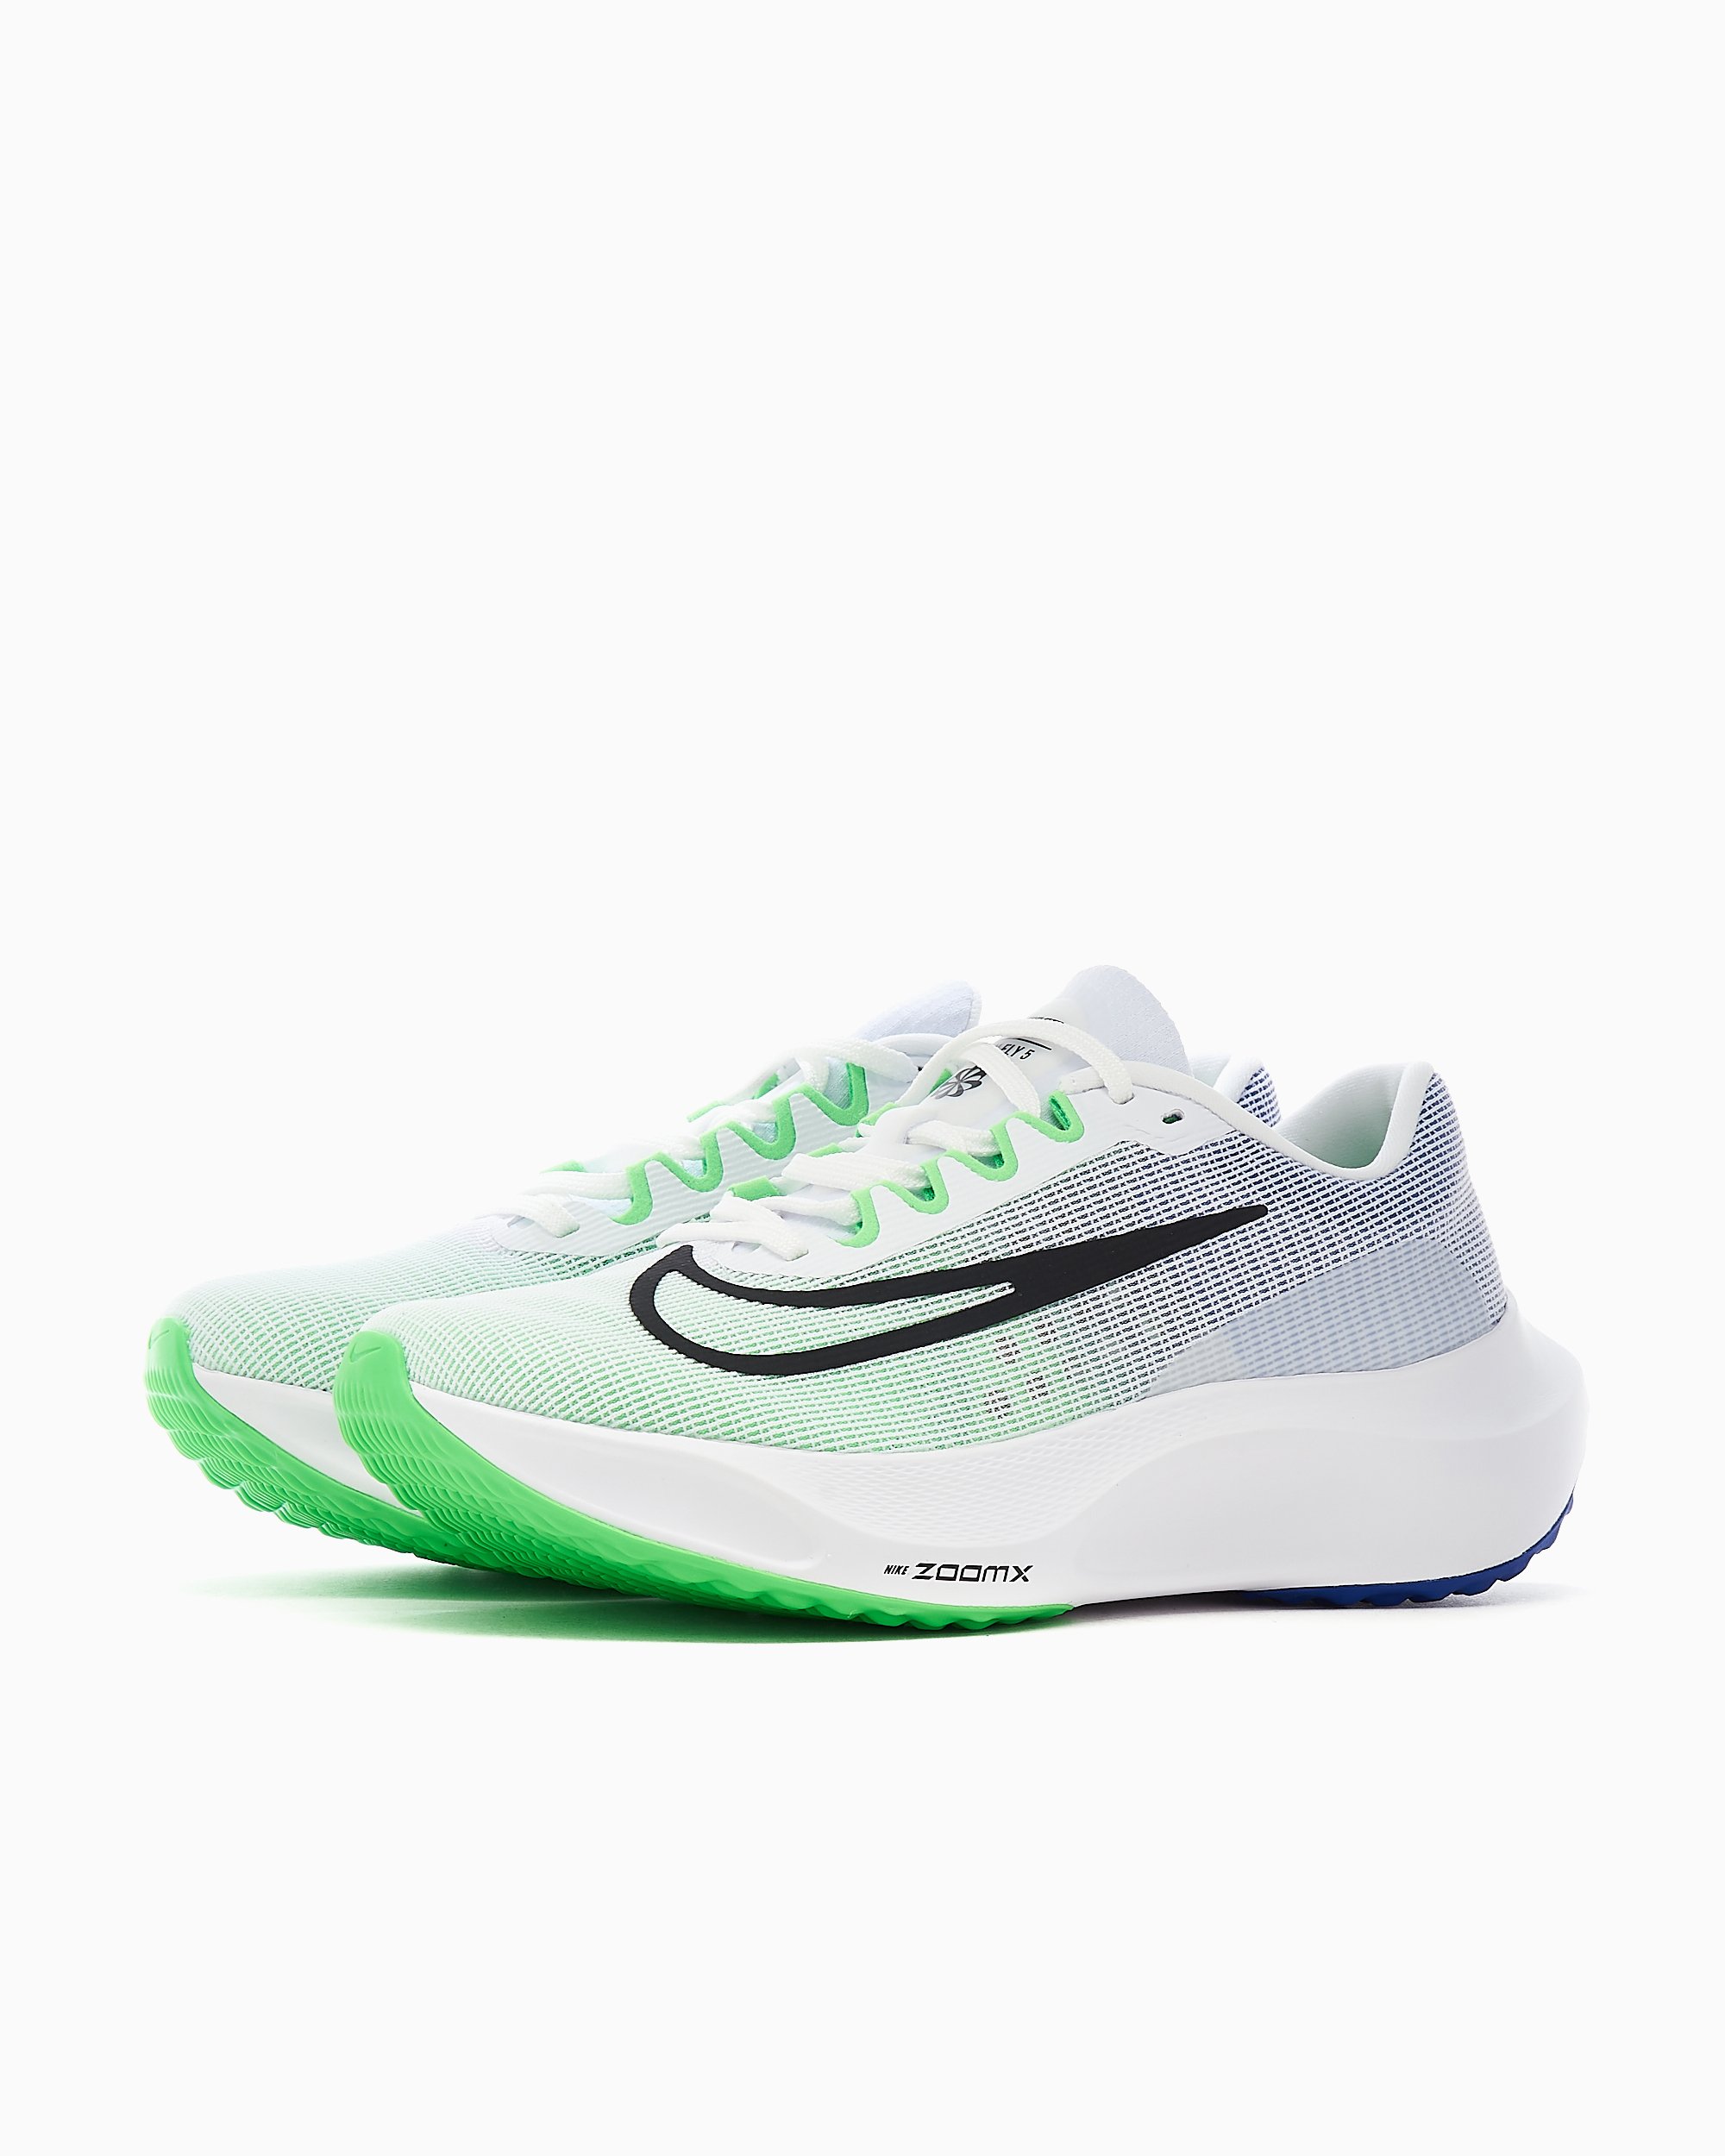 Nike Zoom Fly 5 Black, Green, White DM8968-101| Buy Online at FOOTDISTRICT